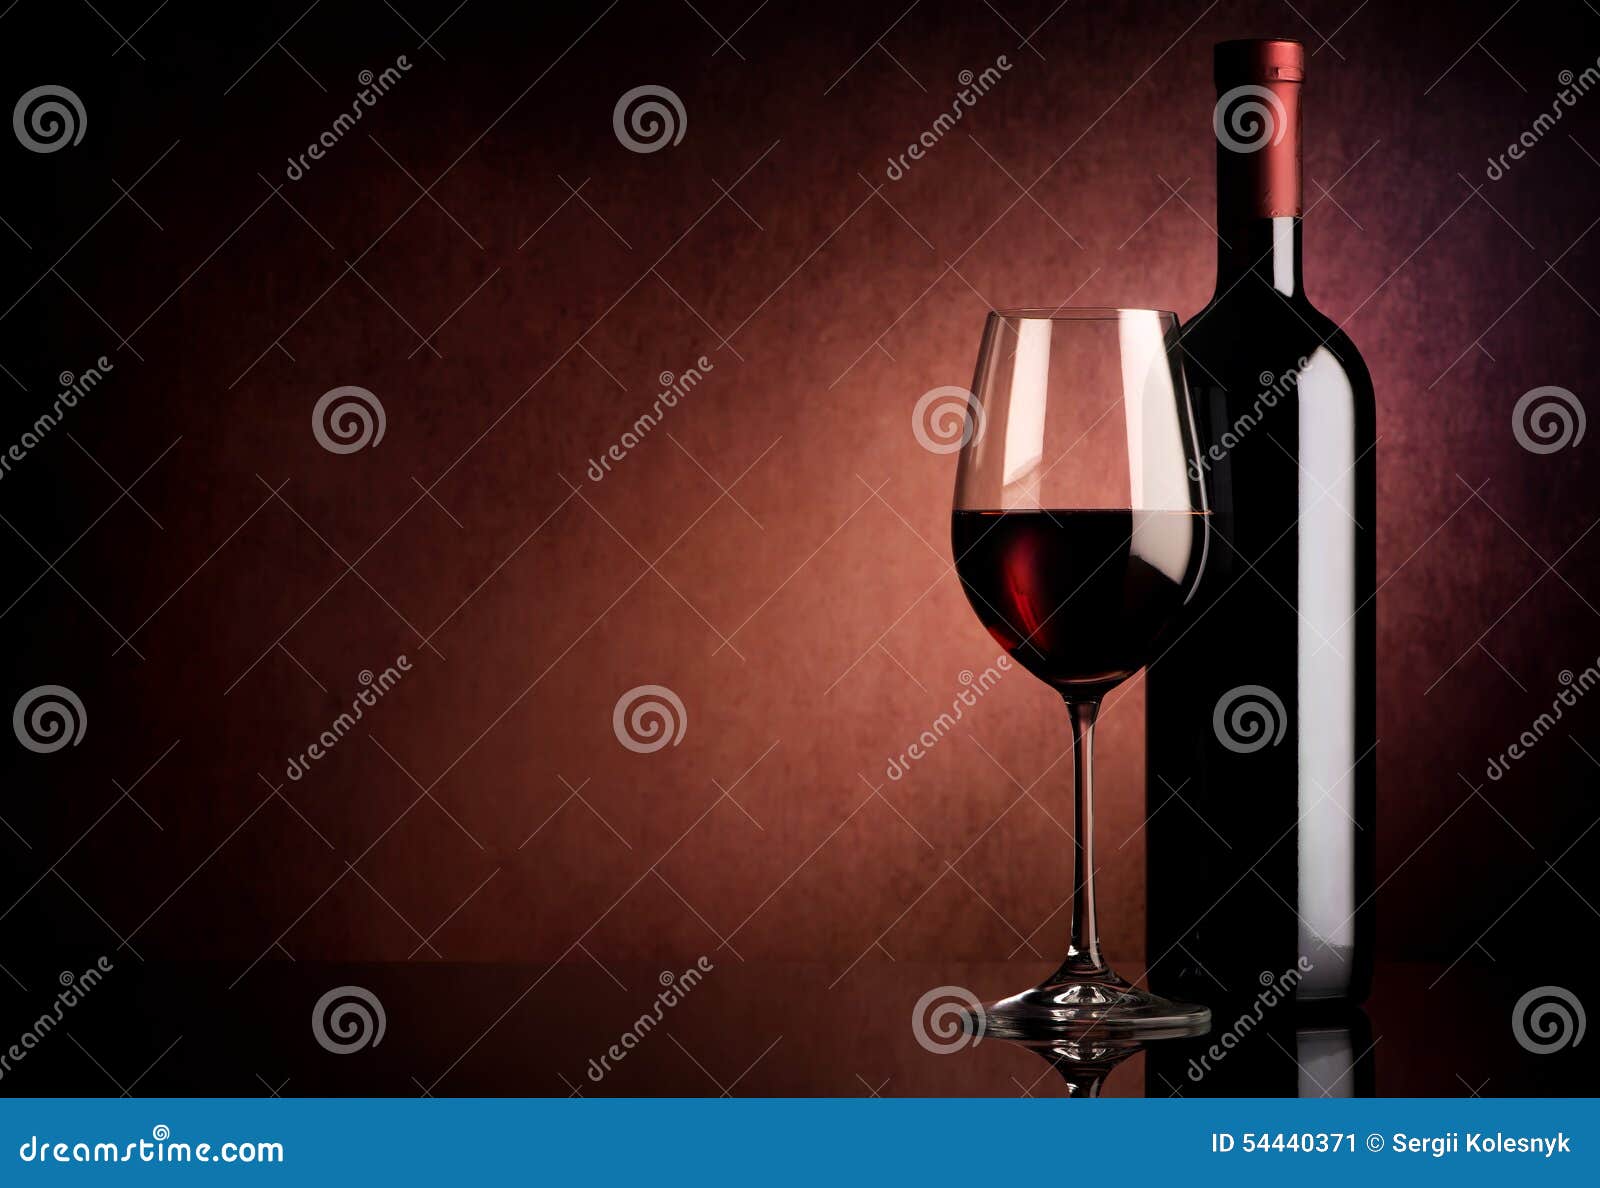 wine on vinous background